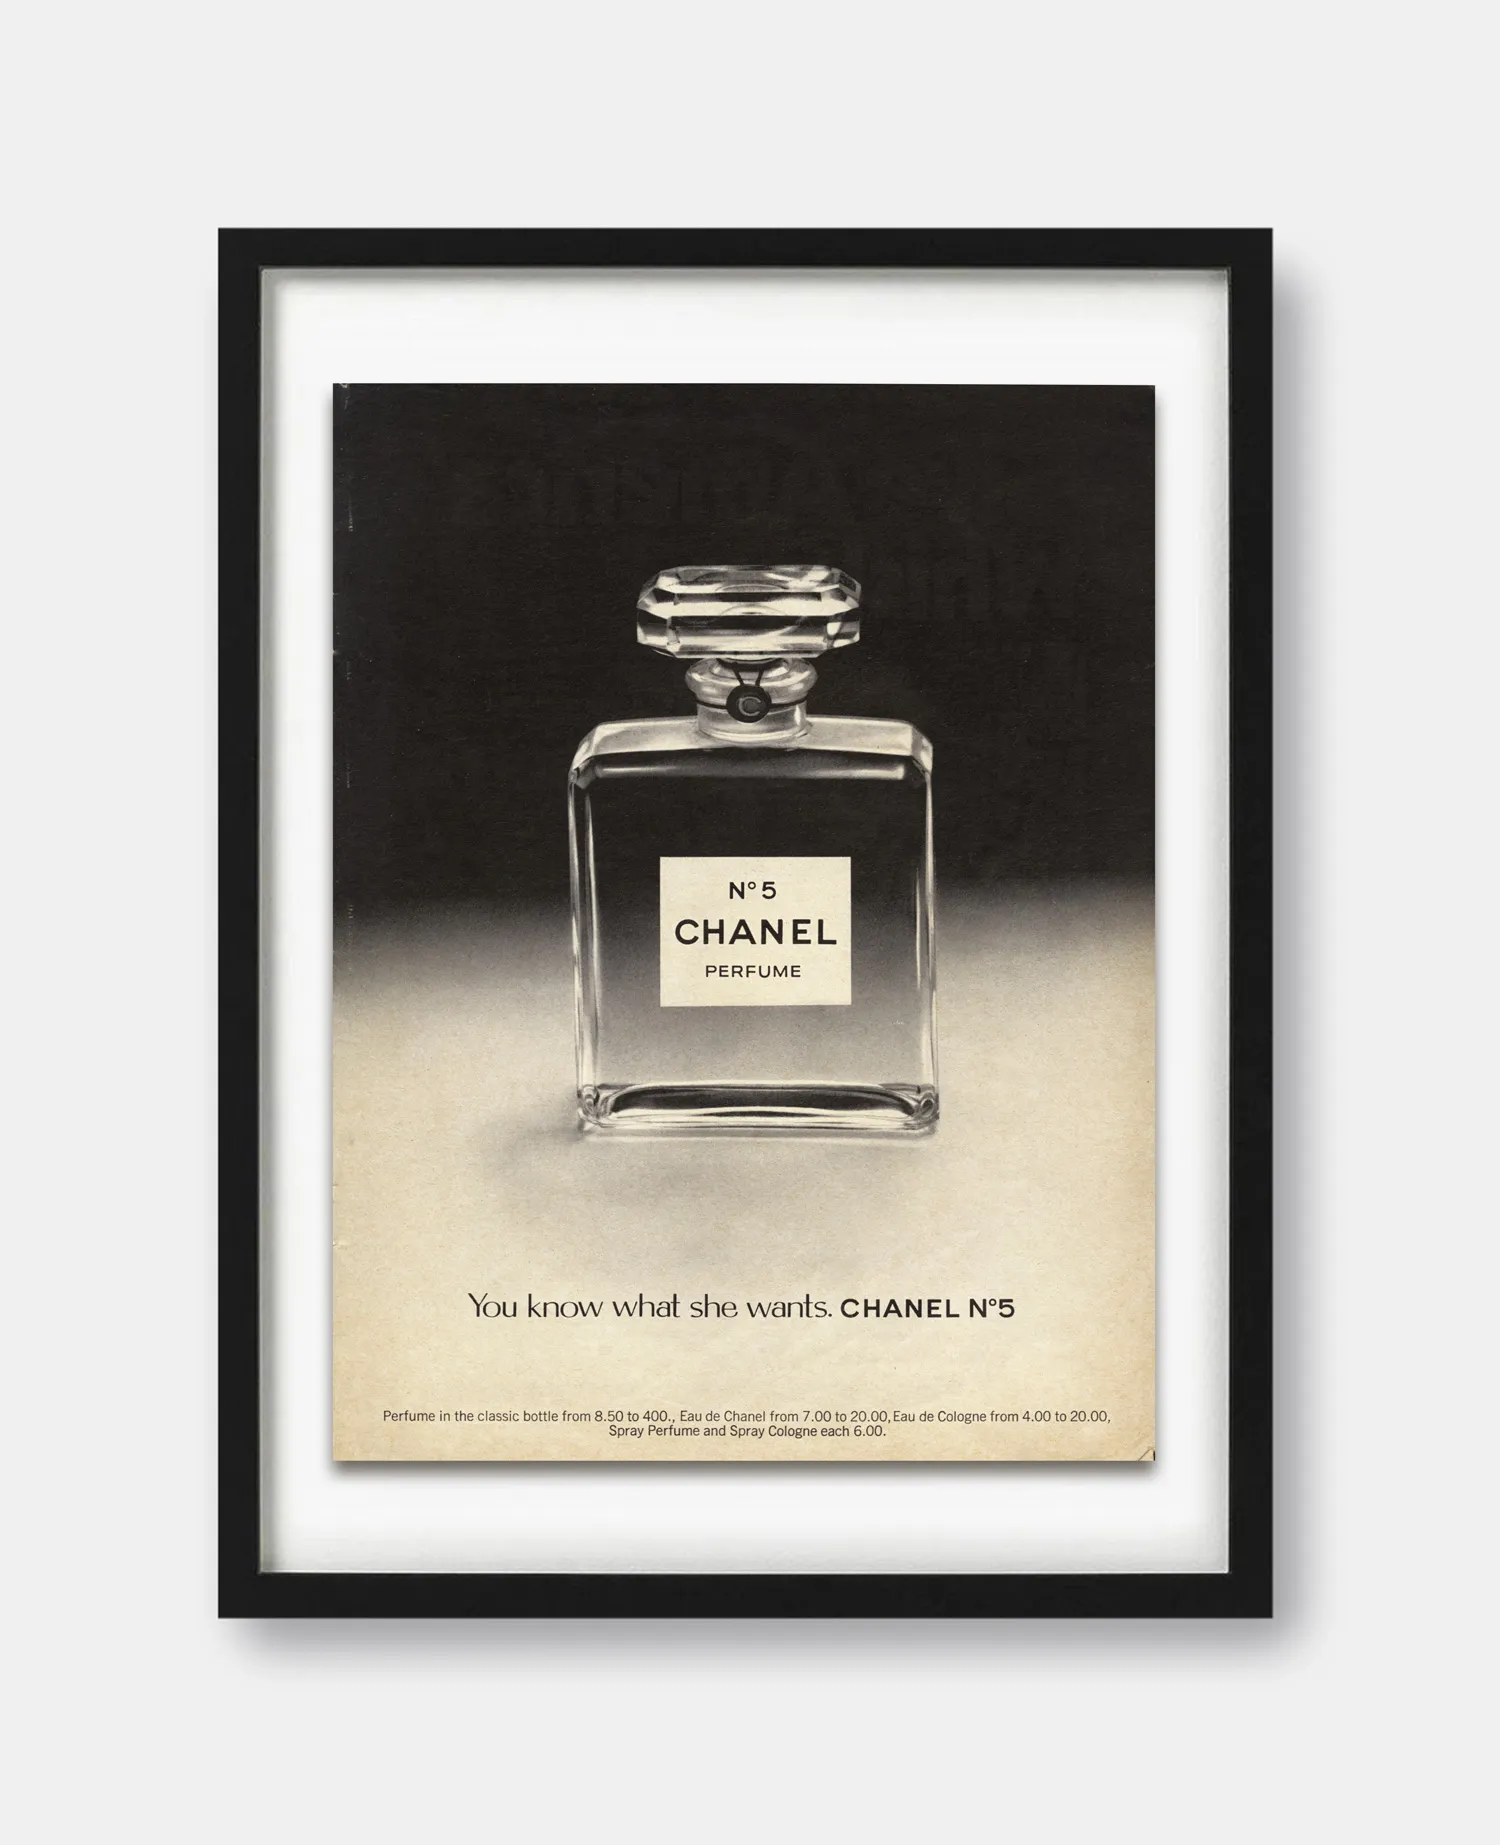 Chanel No. 5 classic ads